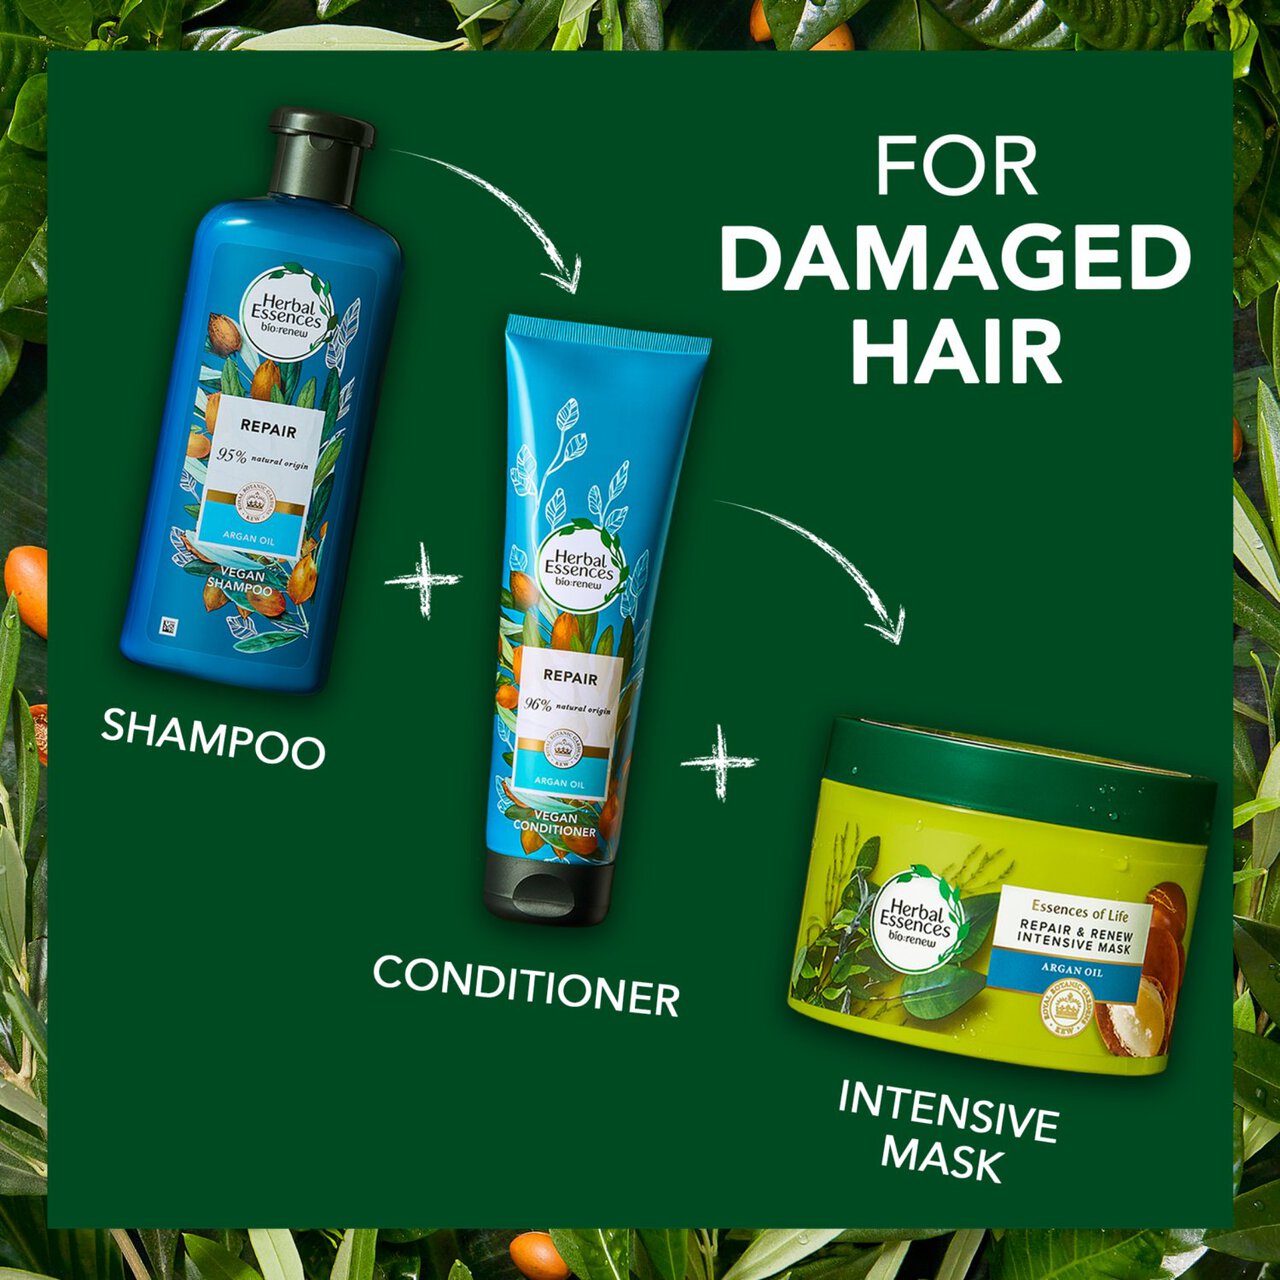 Herbal Essences Bio Renew Repair Argan Oil of Morocco Hair Conditioner 275ml